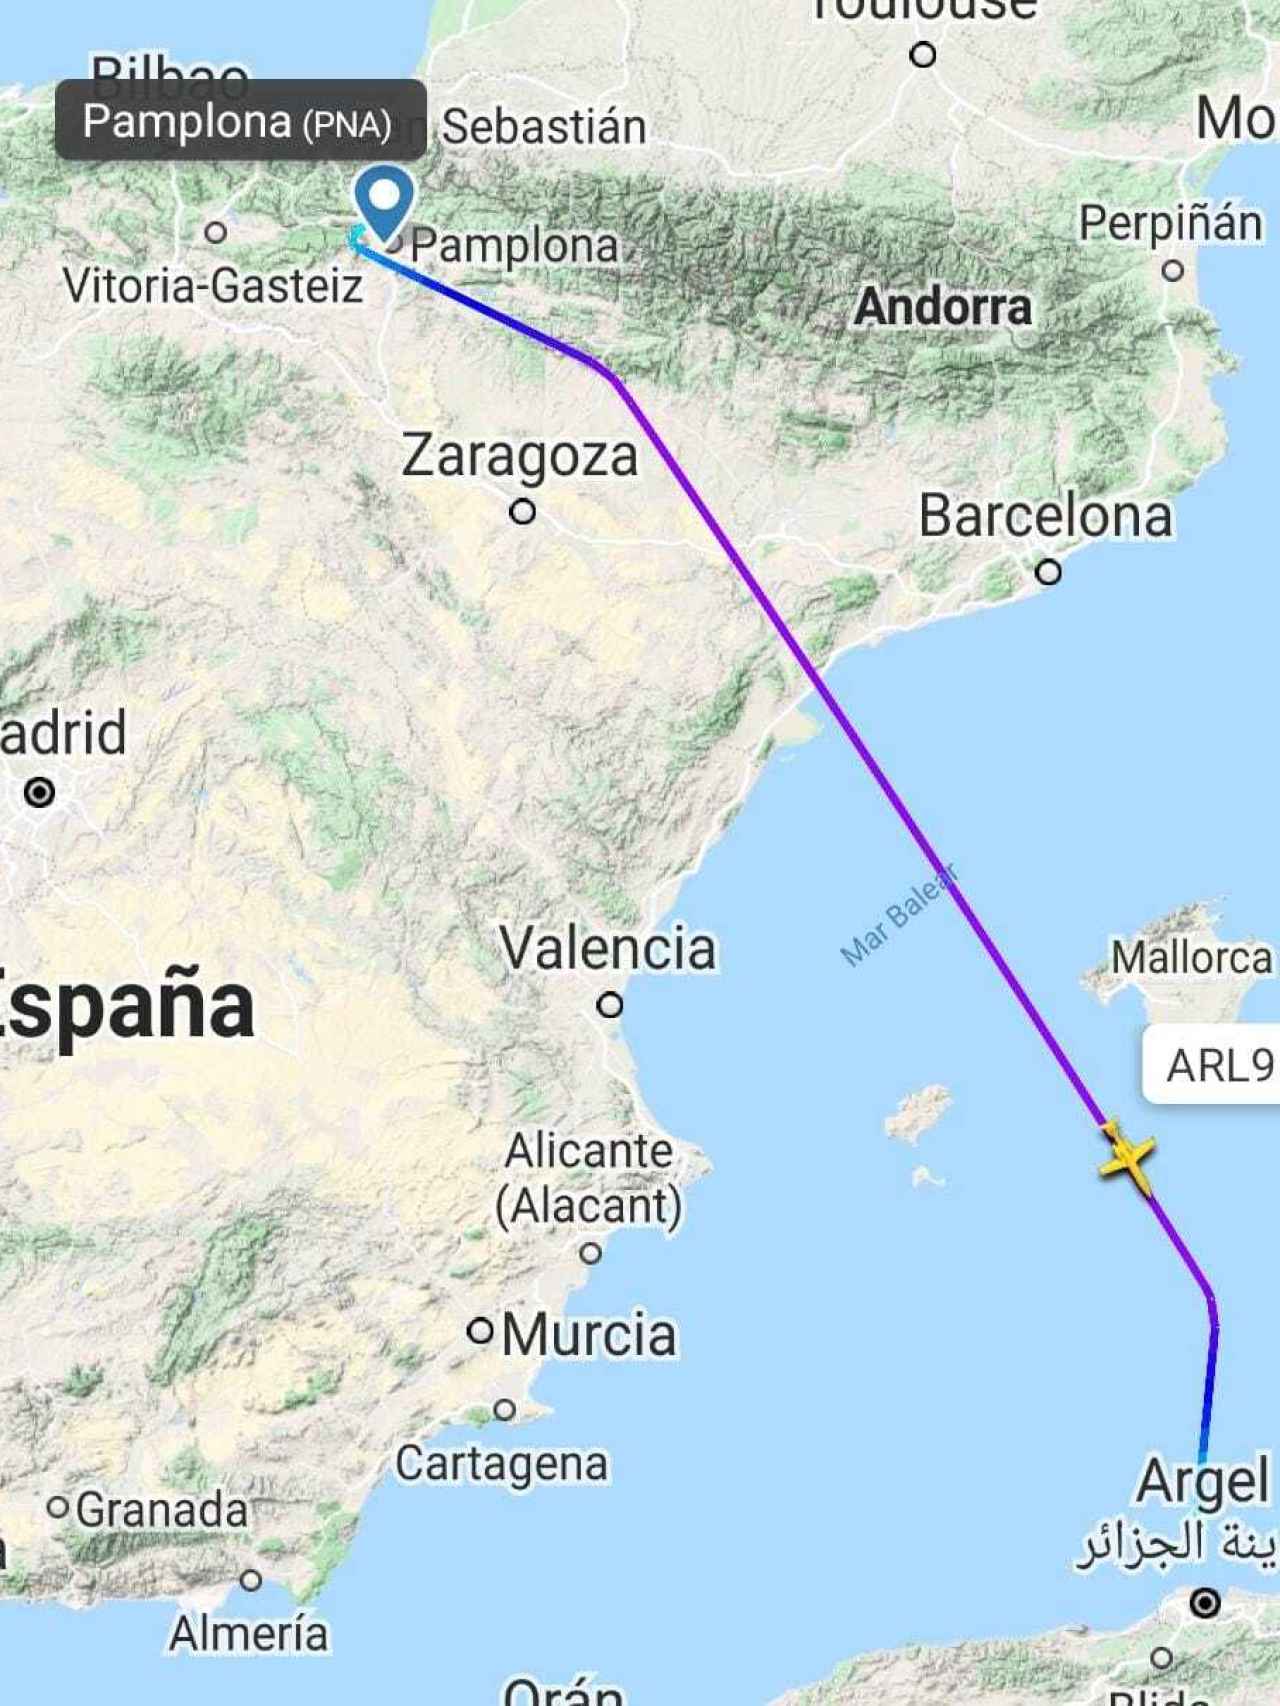 Ruta del vuelo de Ghali de Pamplona a Argel.